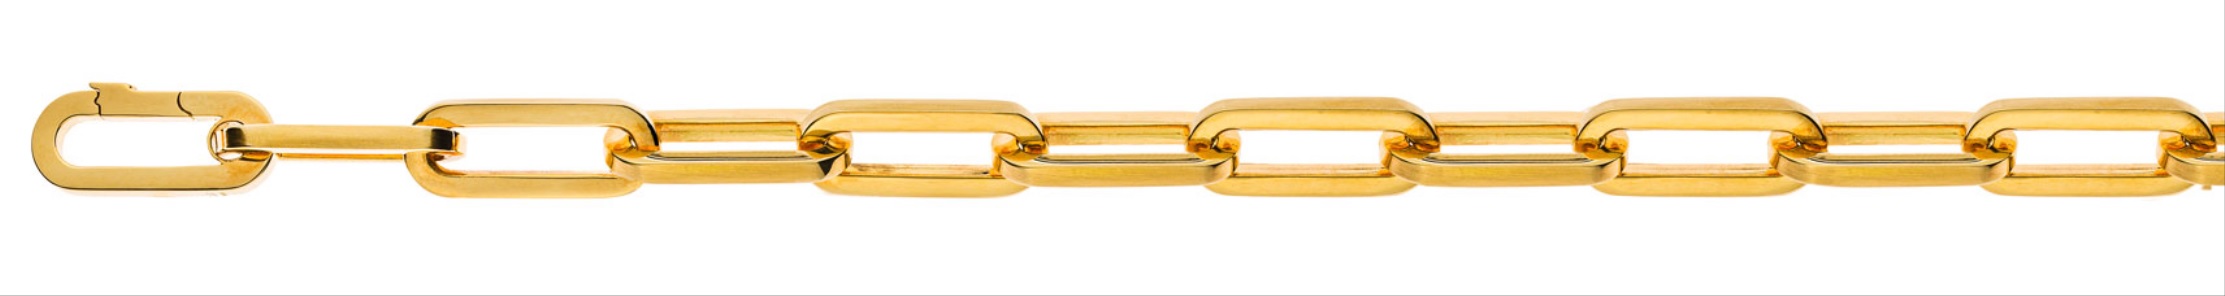 AURONOS Prestige Armband Oval-Anker 18K Gelbgold 21.5cm Carnédraht